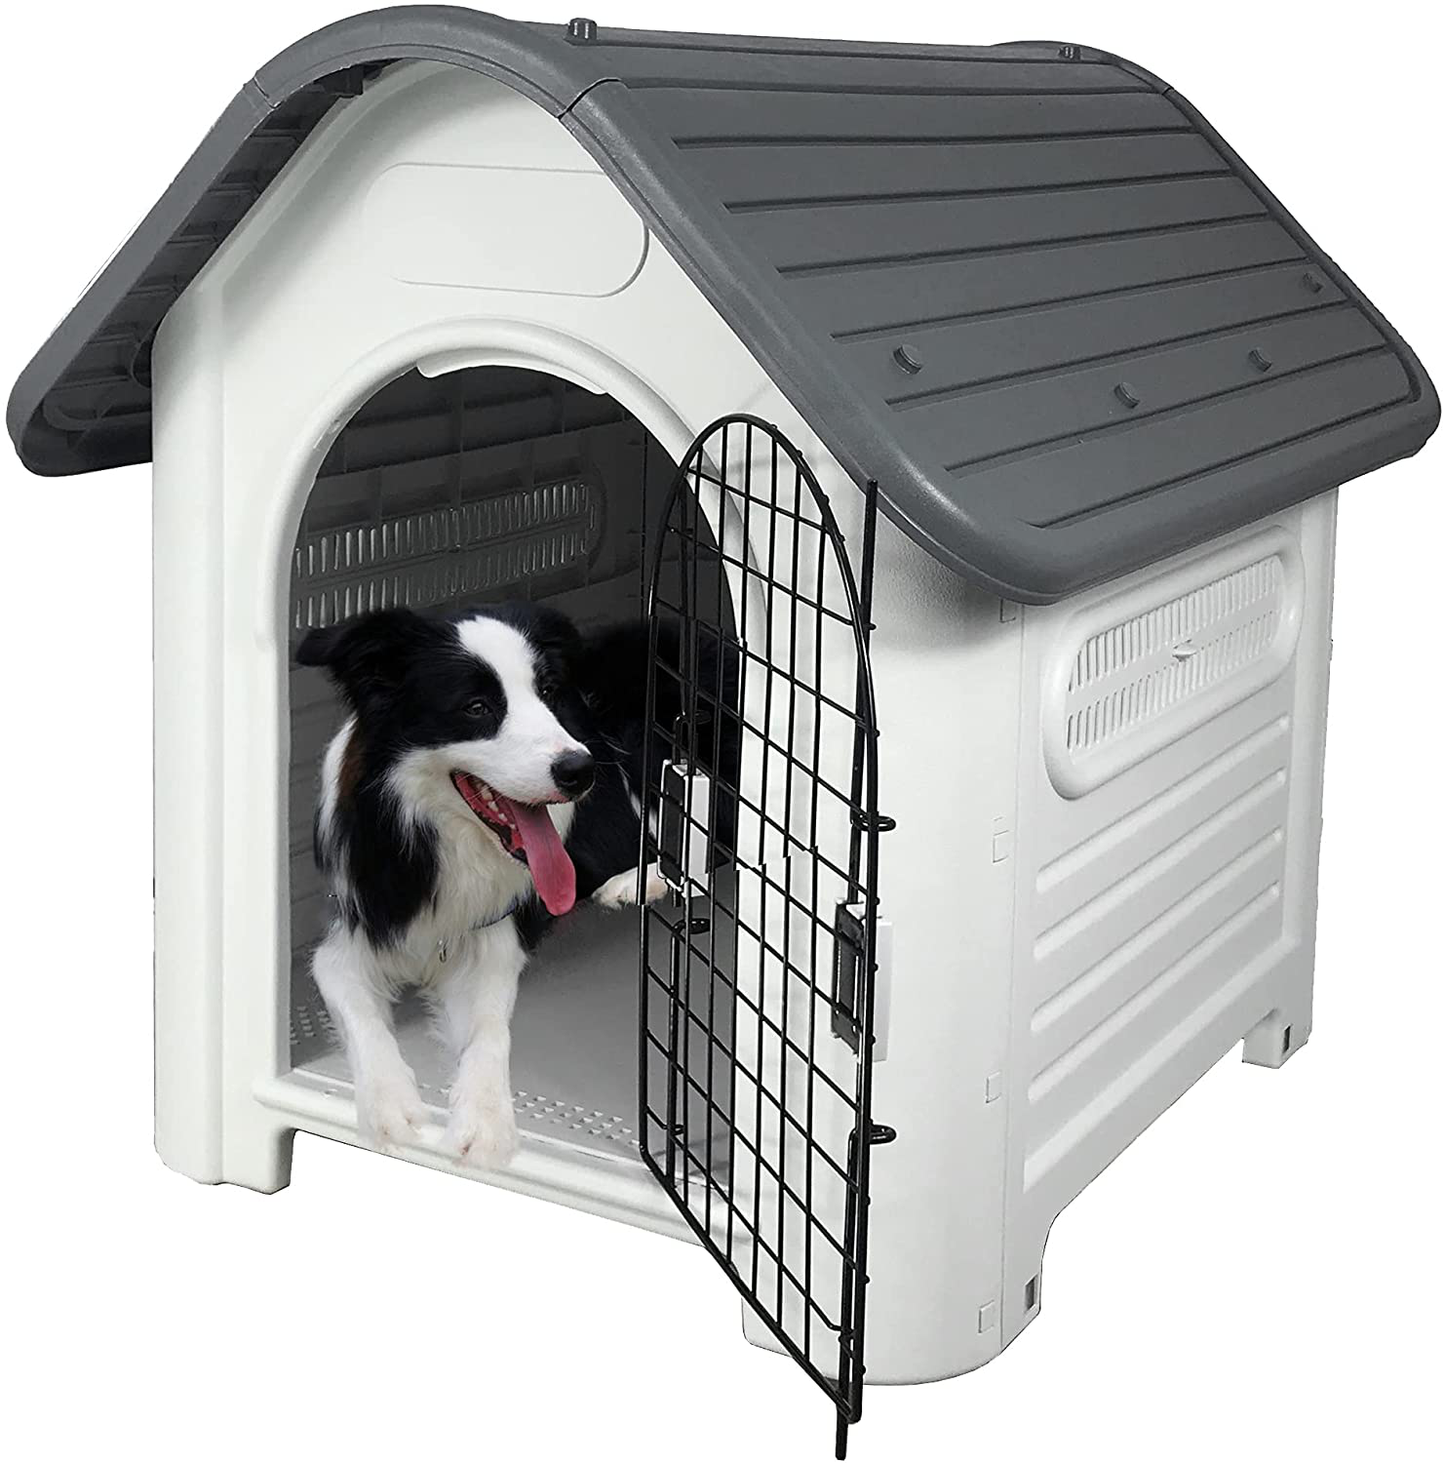 Sdyjfz Plastic Dog Housexxl Height Waterproof Plastic Dog Kennelindoor Outdoor Detachable Sturdy Floor for Backyard Patio Balcony